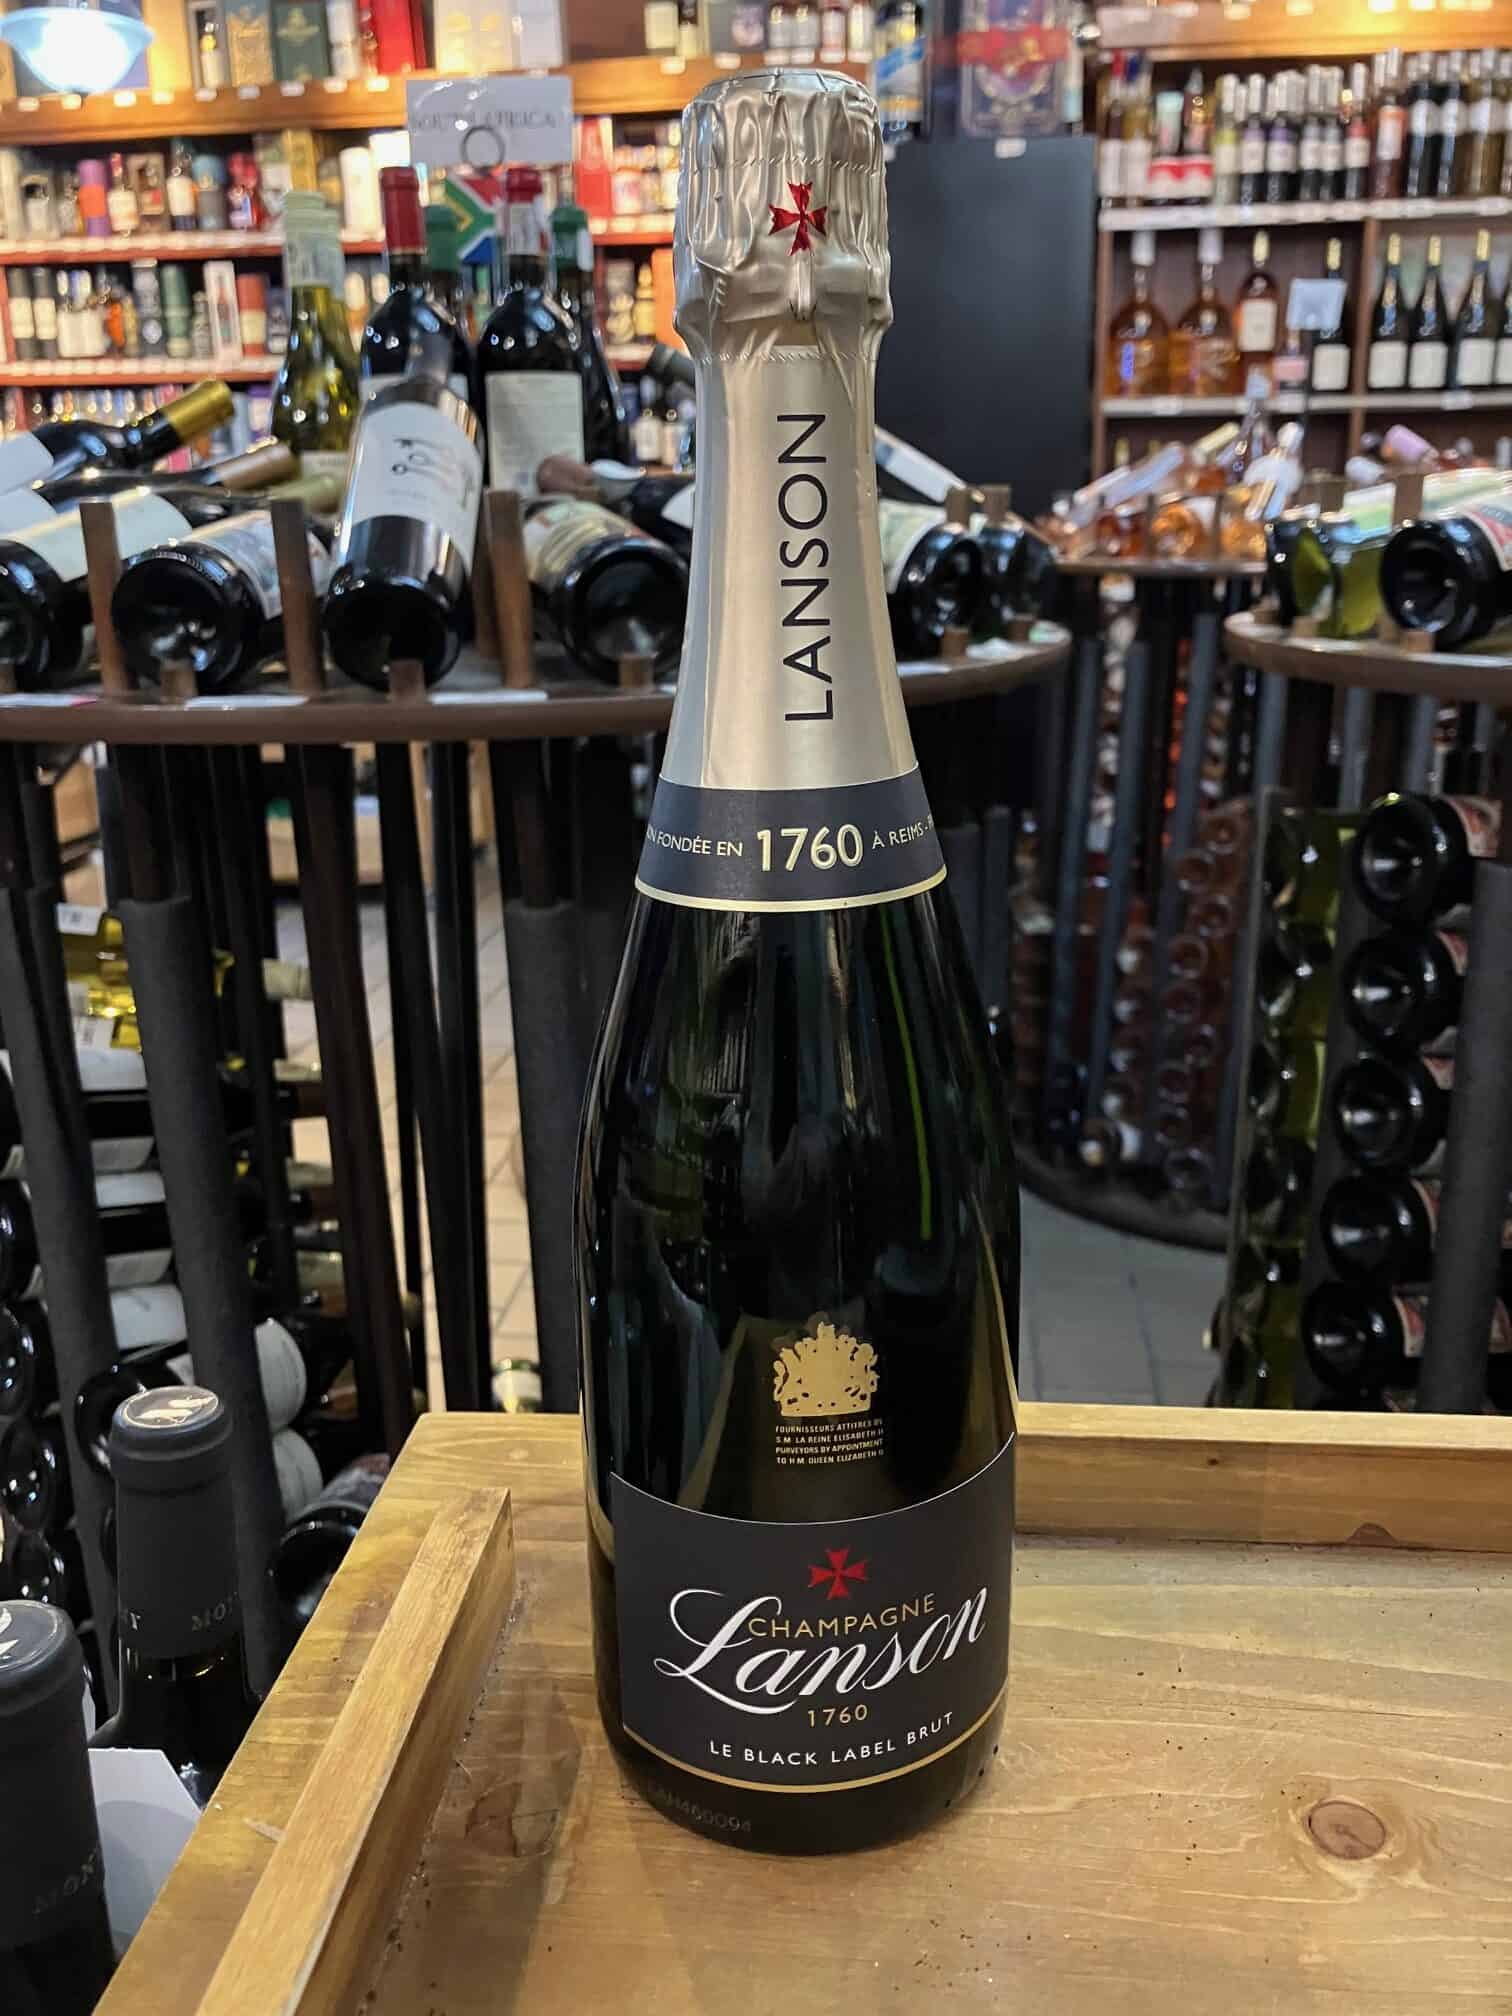 Le Label Ambassador Black Wines Lanson Champagne | Brut